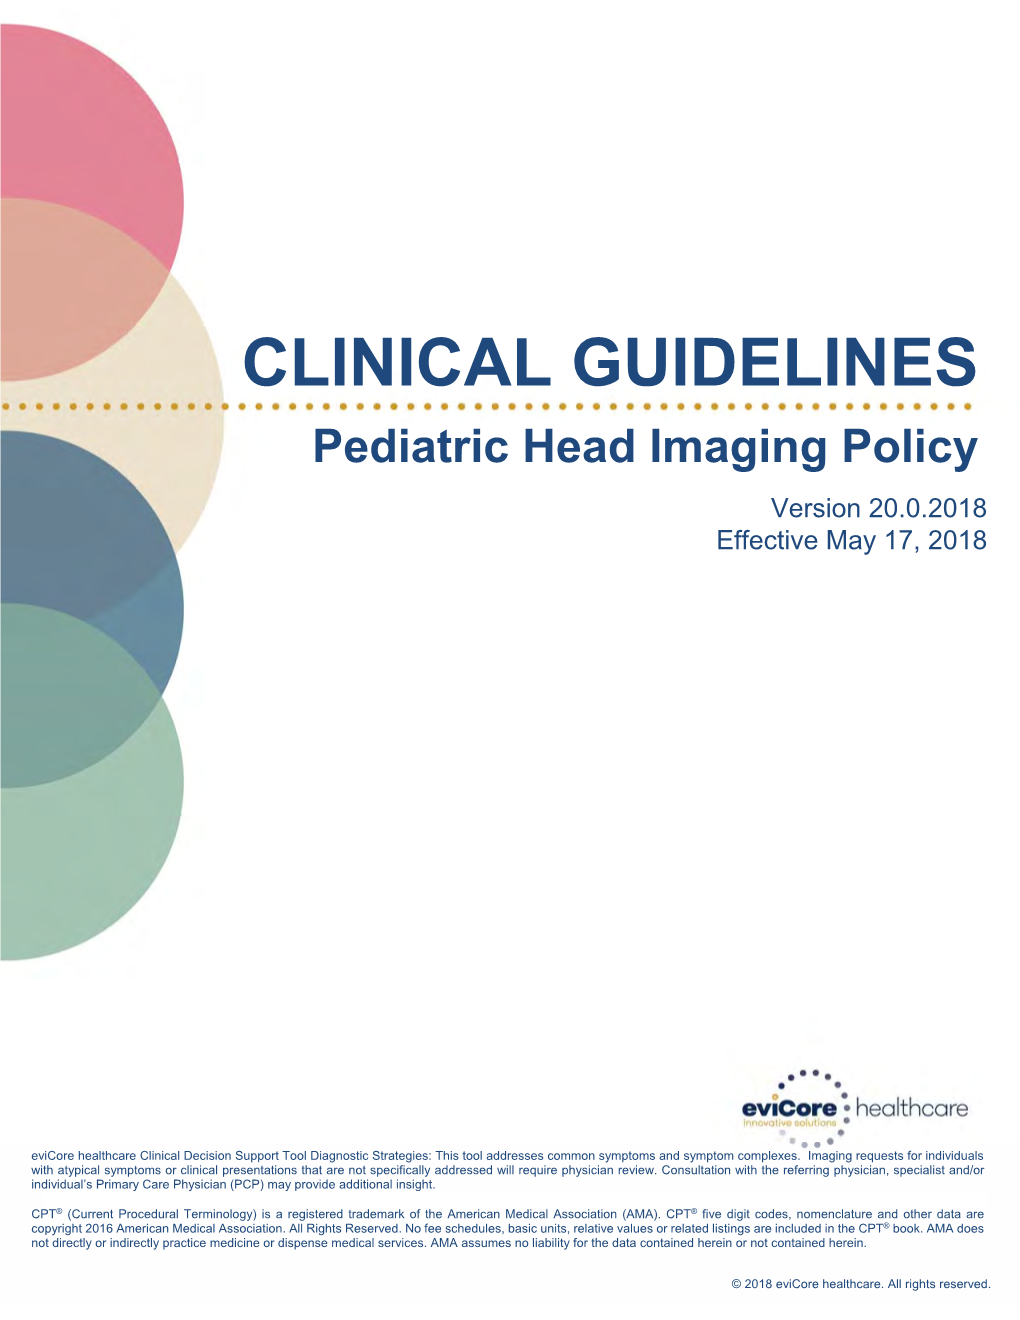 Evicore Pediatric Head Imaging V20.0.2018 Eff 05.17.18